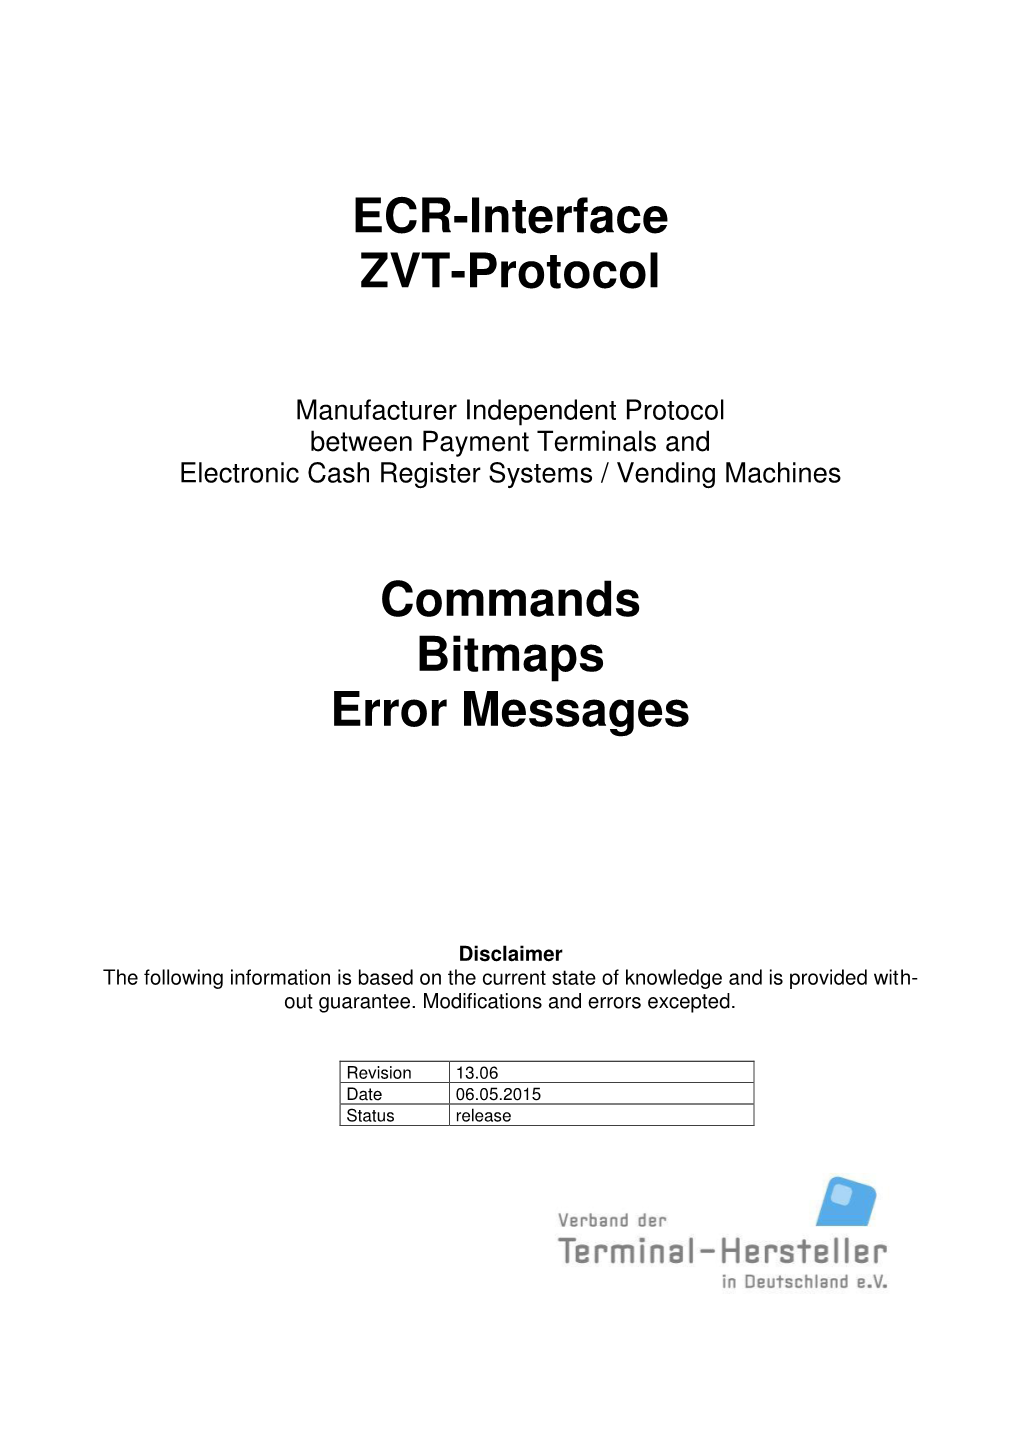 ECR-Interface ZVT-Protocol